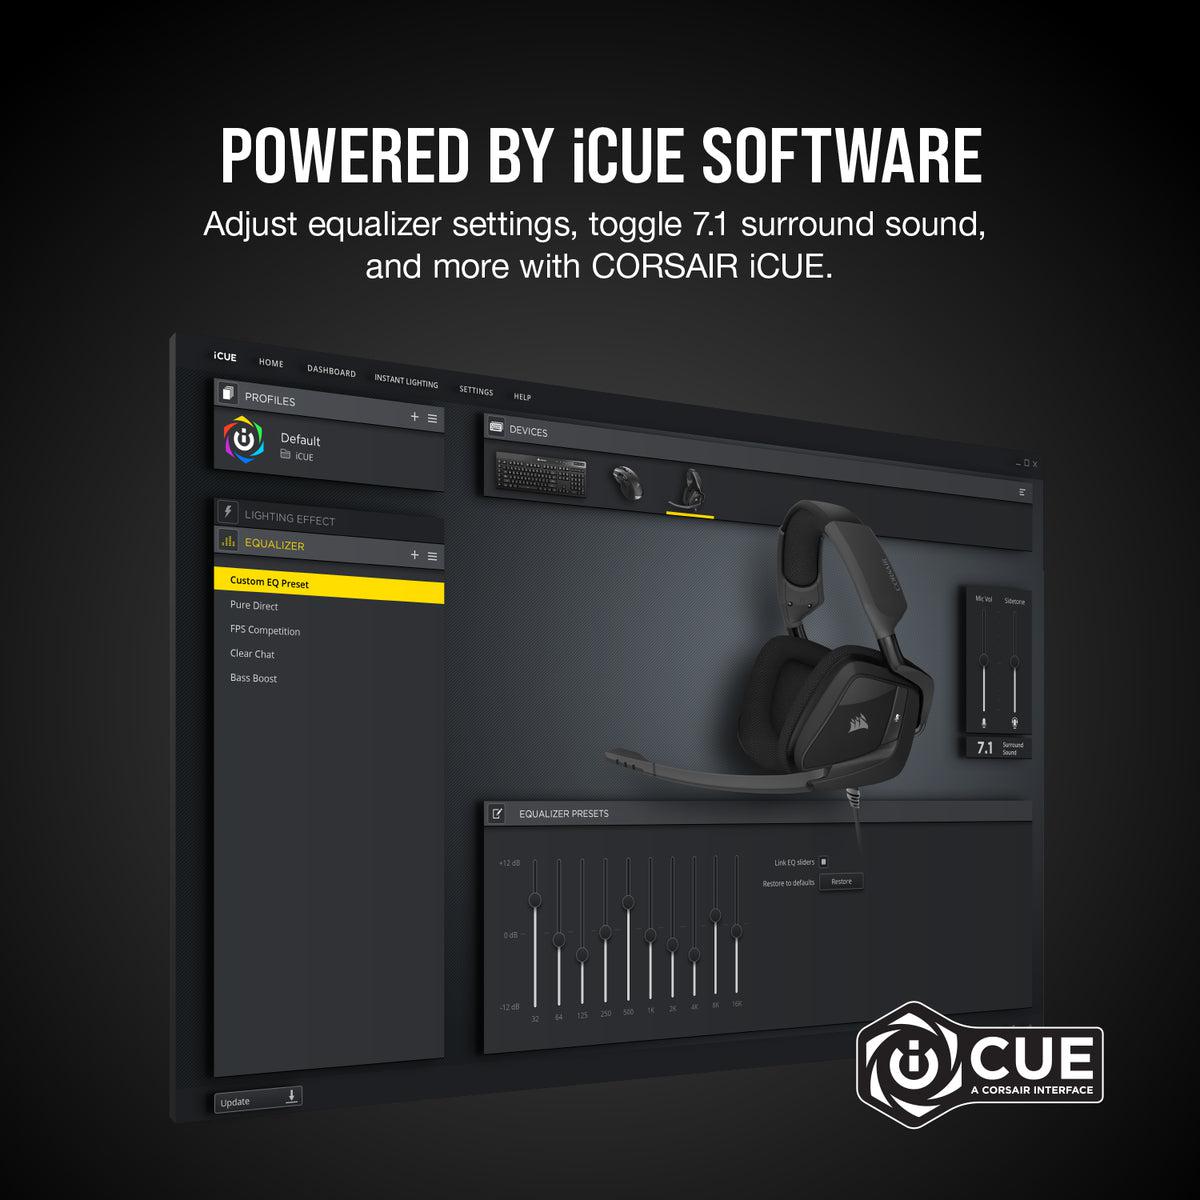 Corsair VOID Elite Surround Premium Gaming Headset with Dolby® Headphone 7.1 — Carbon